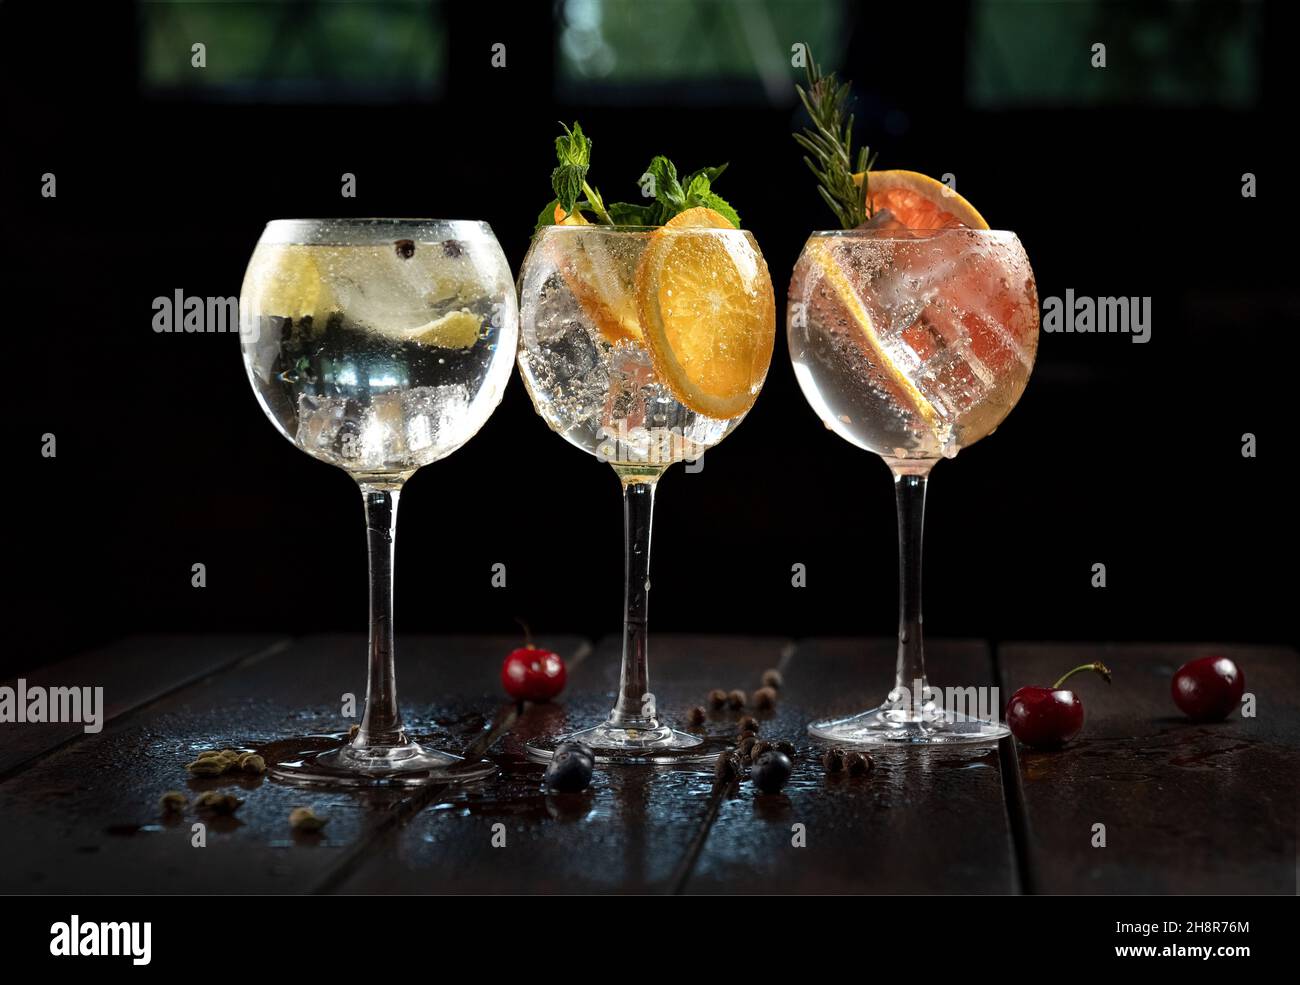 Variedades de bebida alcohólica (tragos de gin et tonique) con limón, pomelo, naranja y hielo en rústica mesa de madera mojada, adorerto con cerezas. Banque D'Images